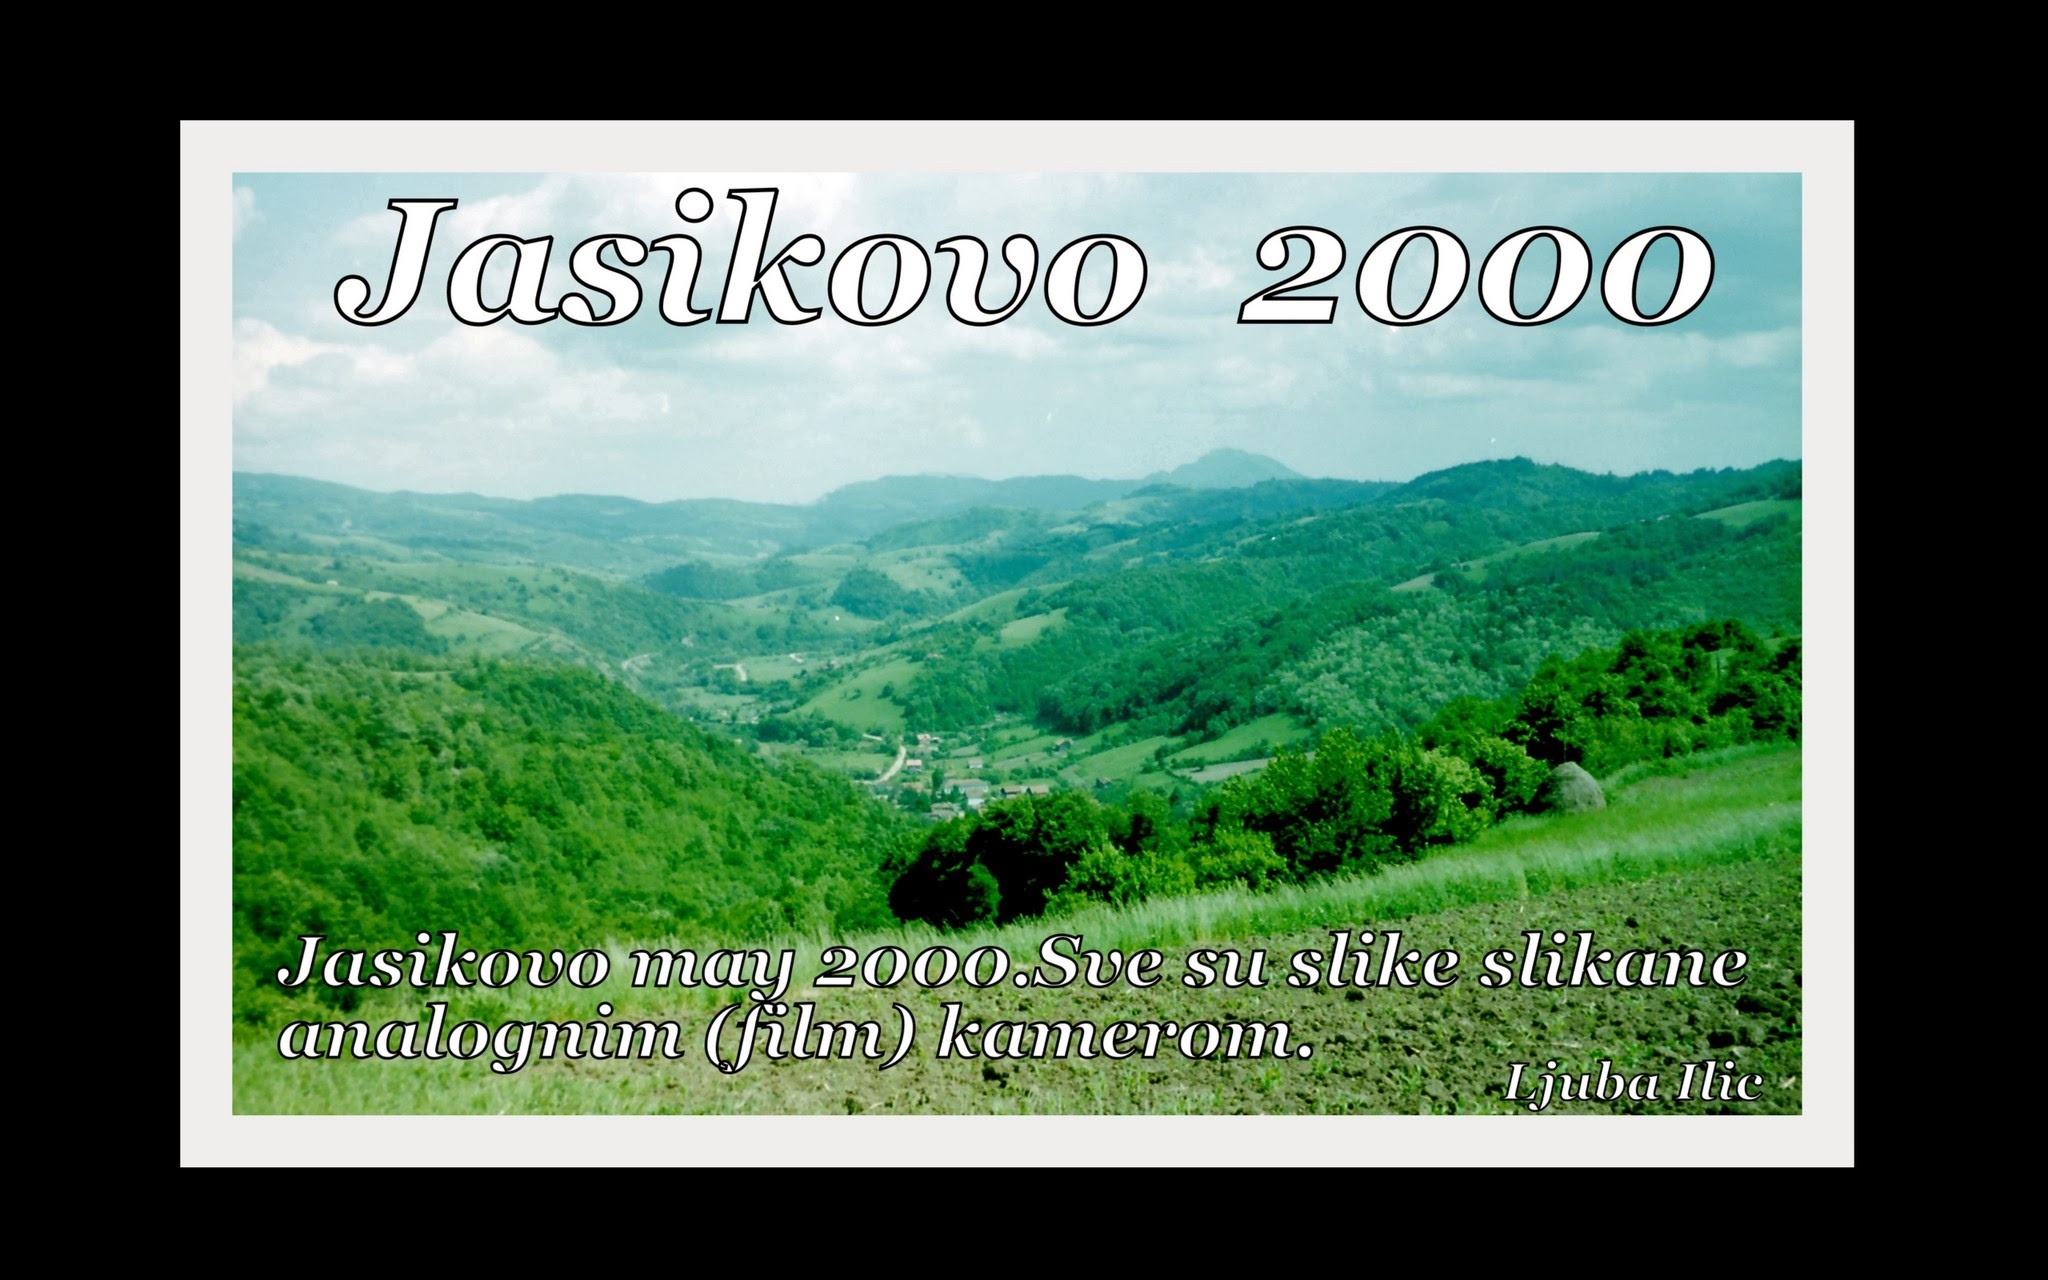 Jasikovo 2000 cover image